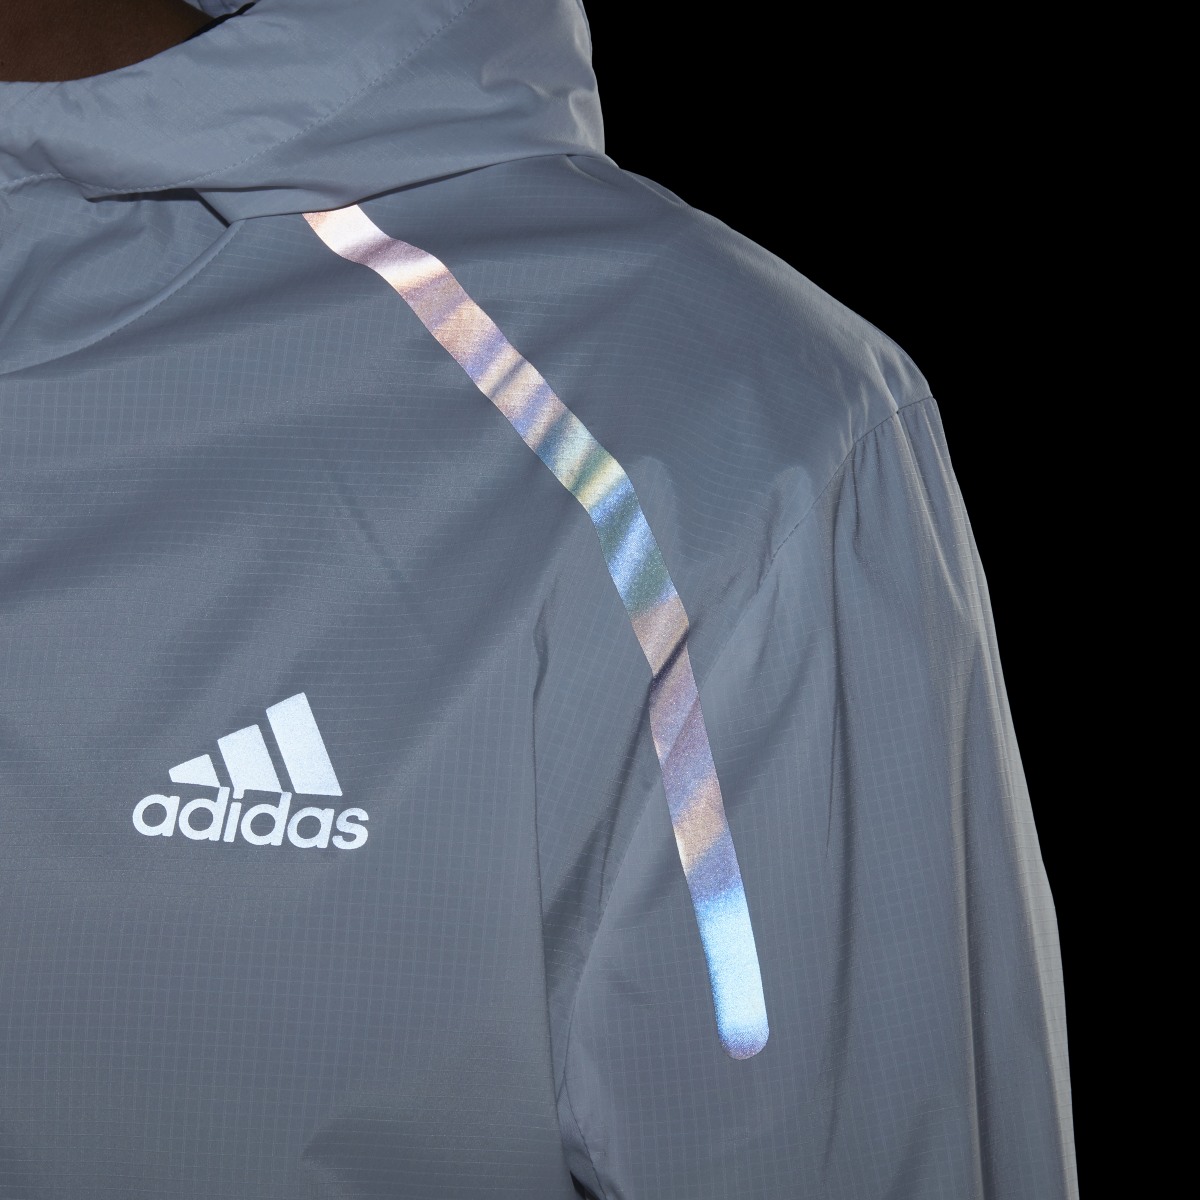 Adidas Marathon Jacket. 8